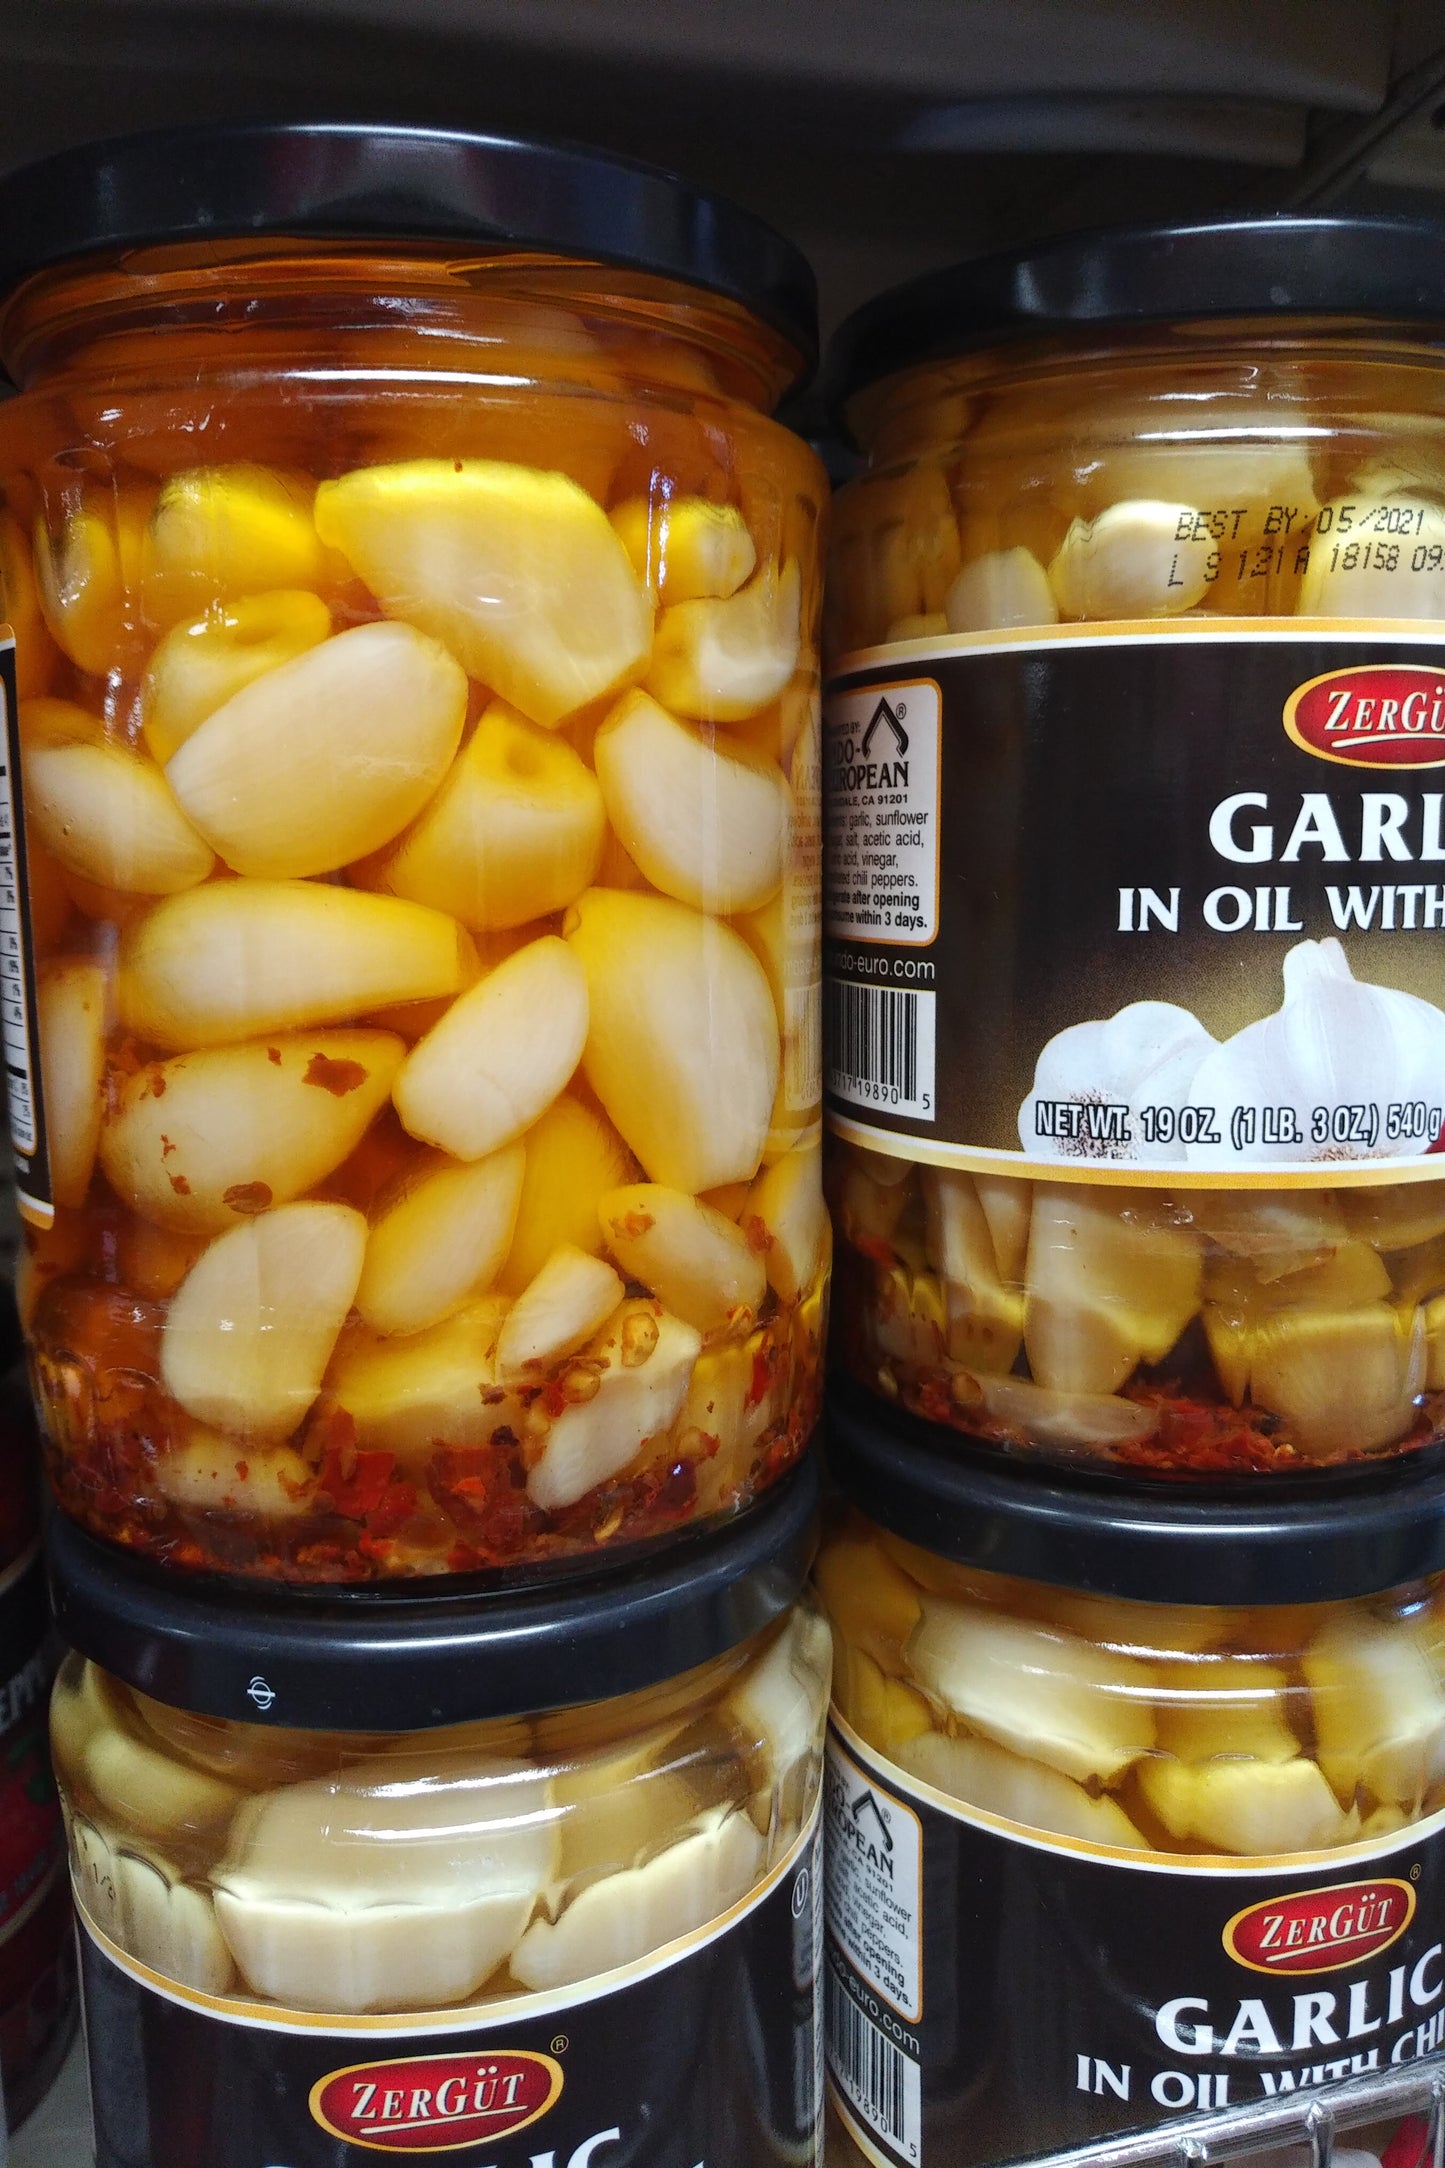 Zergut Garlic In Oil With Chili 19oz